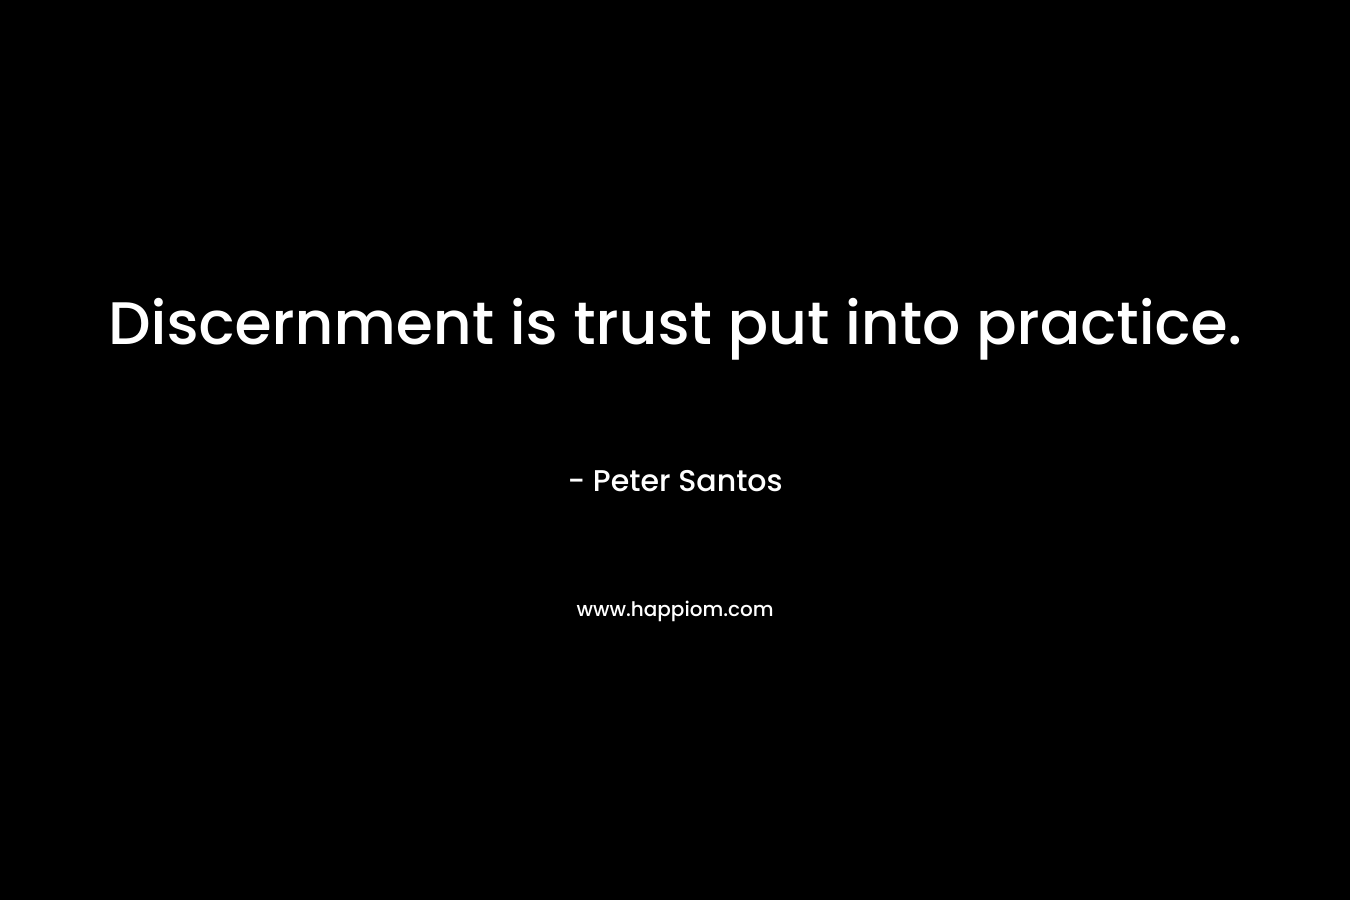 Discernment is trust put into practice.